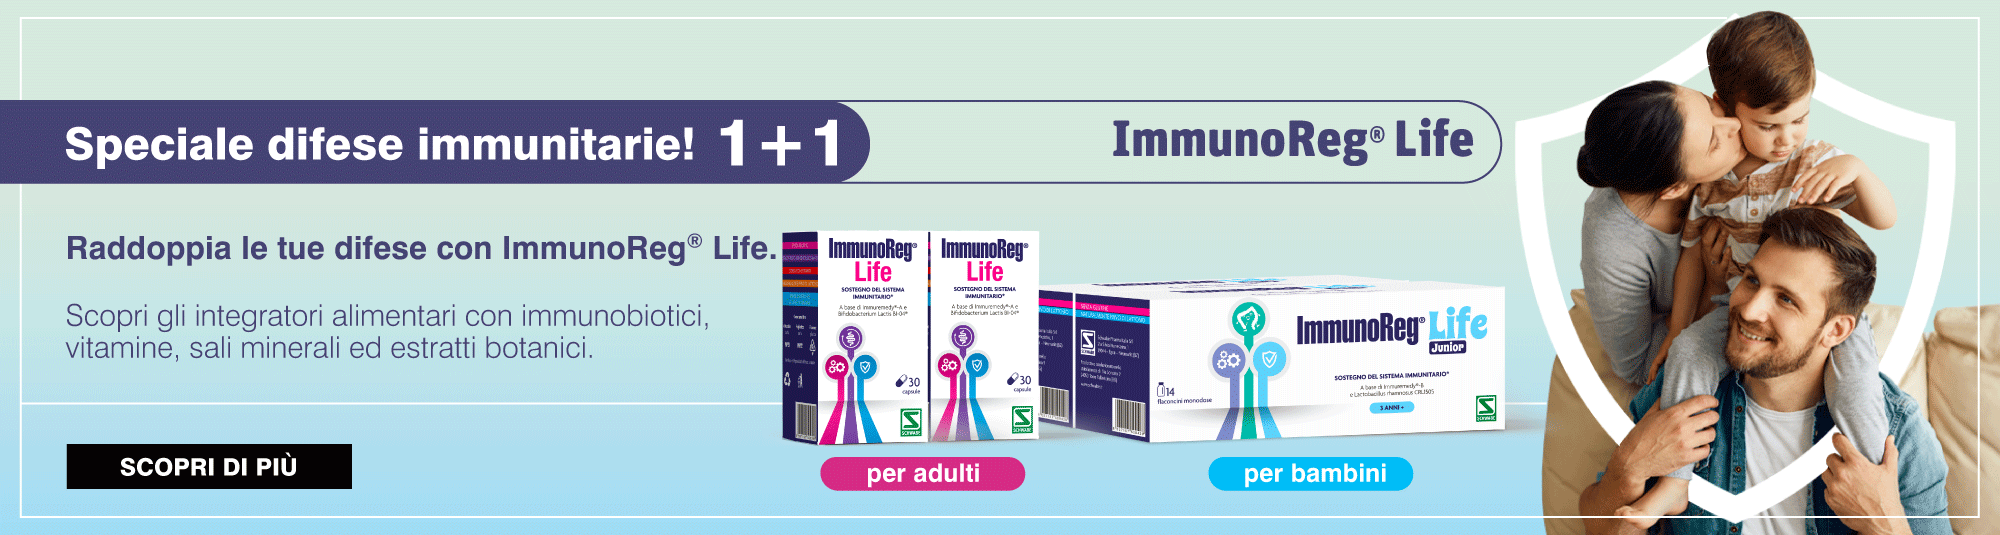 ImmunoReg Life - Schwabe